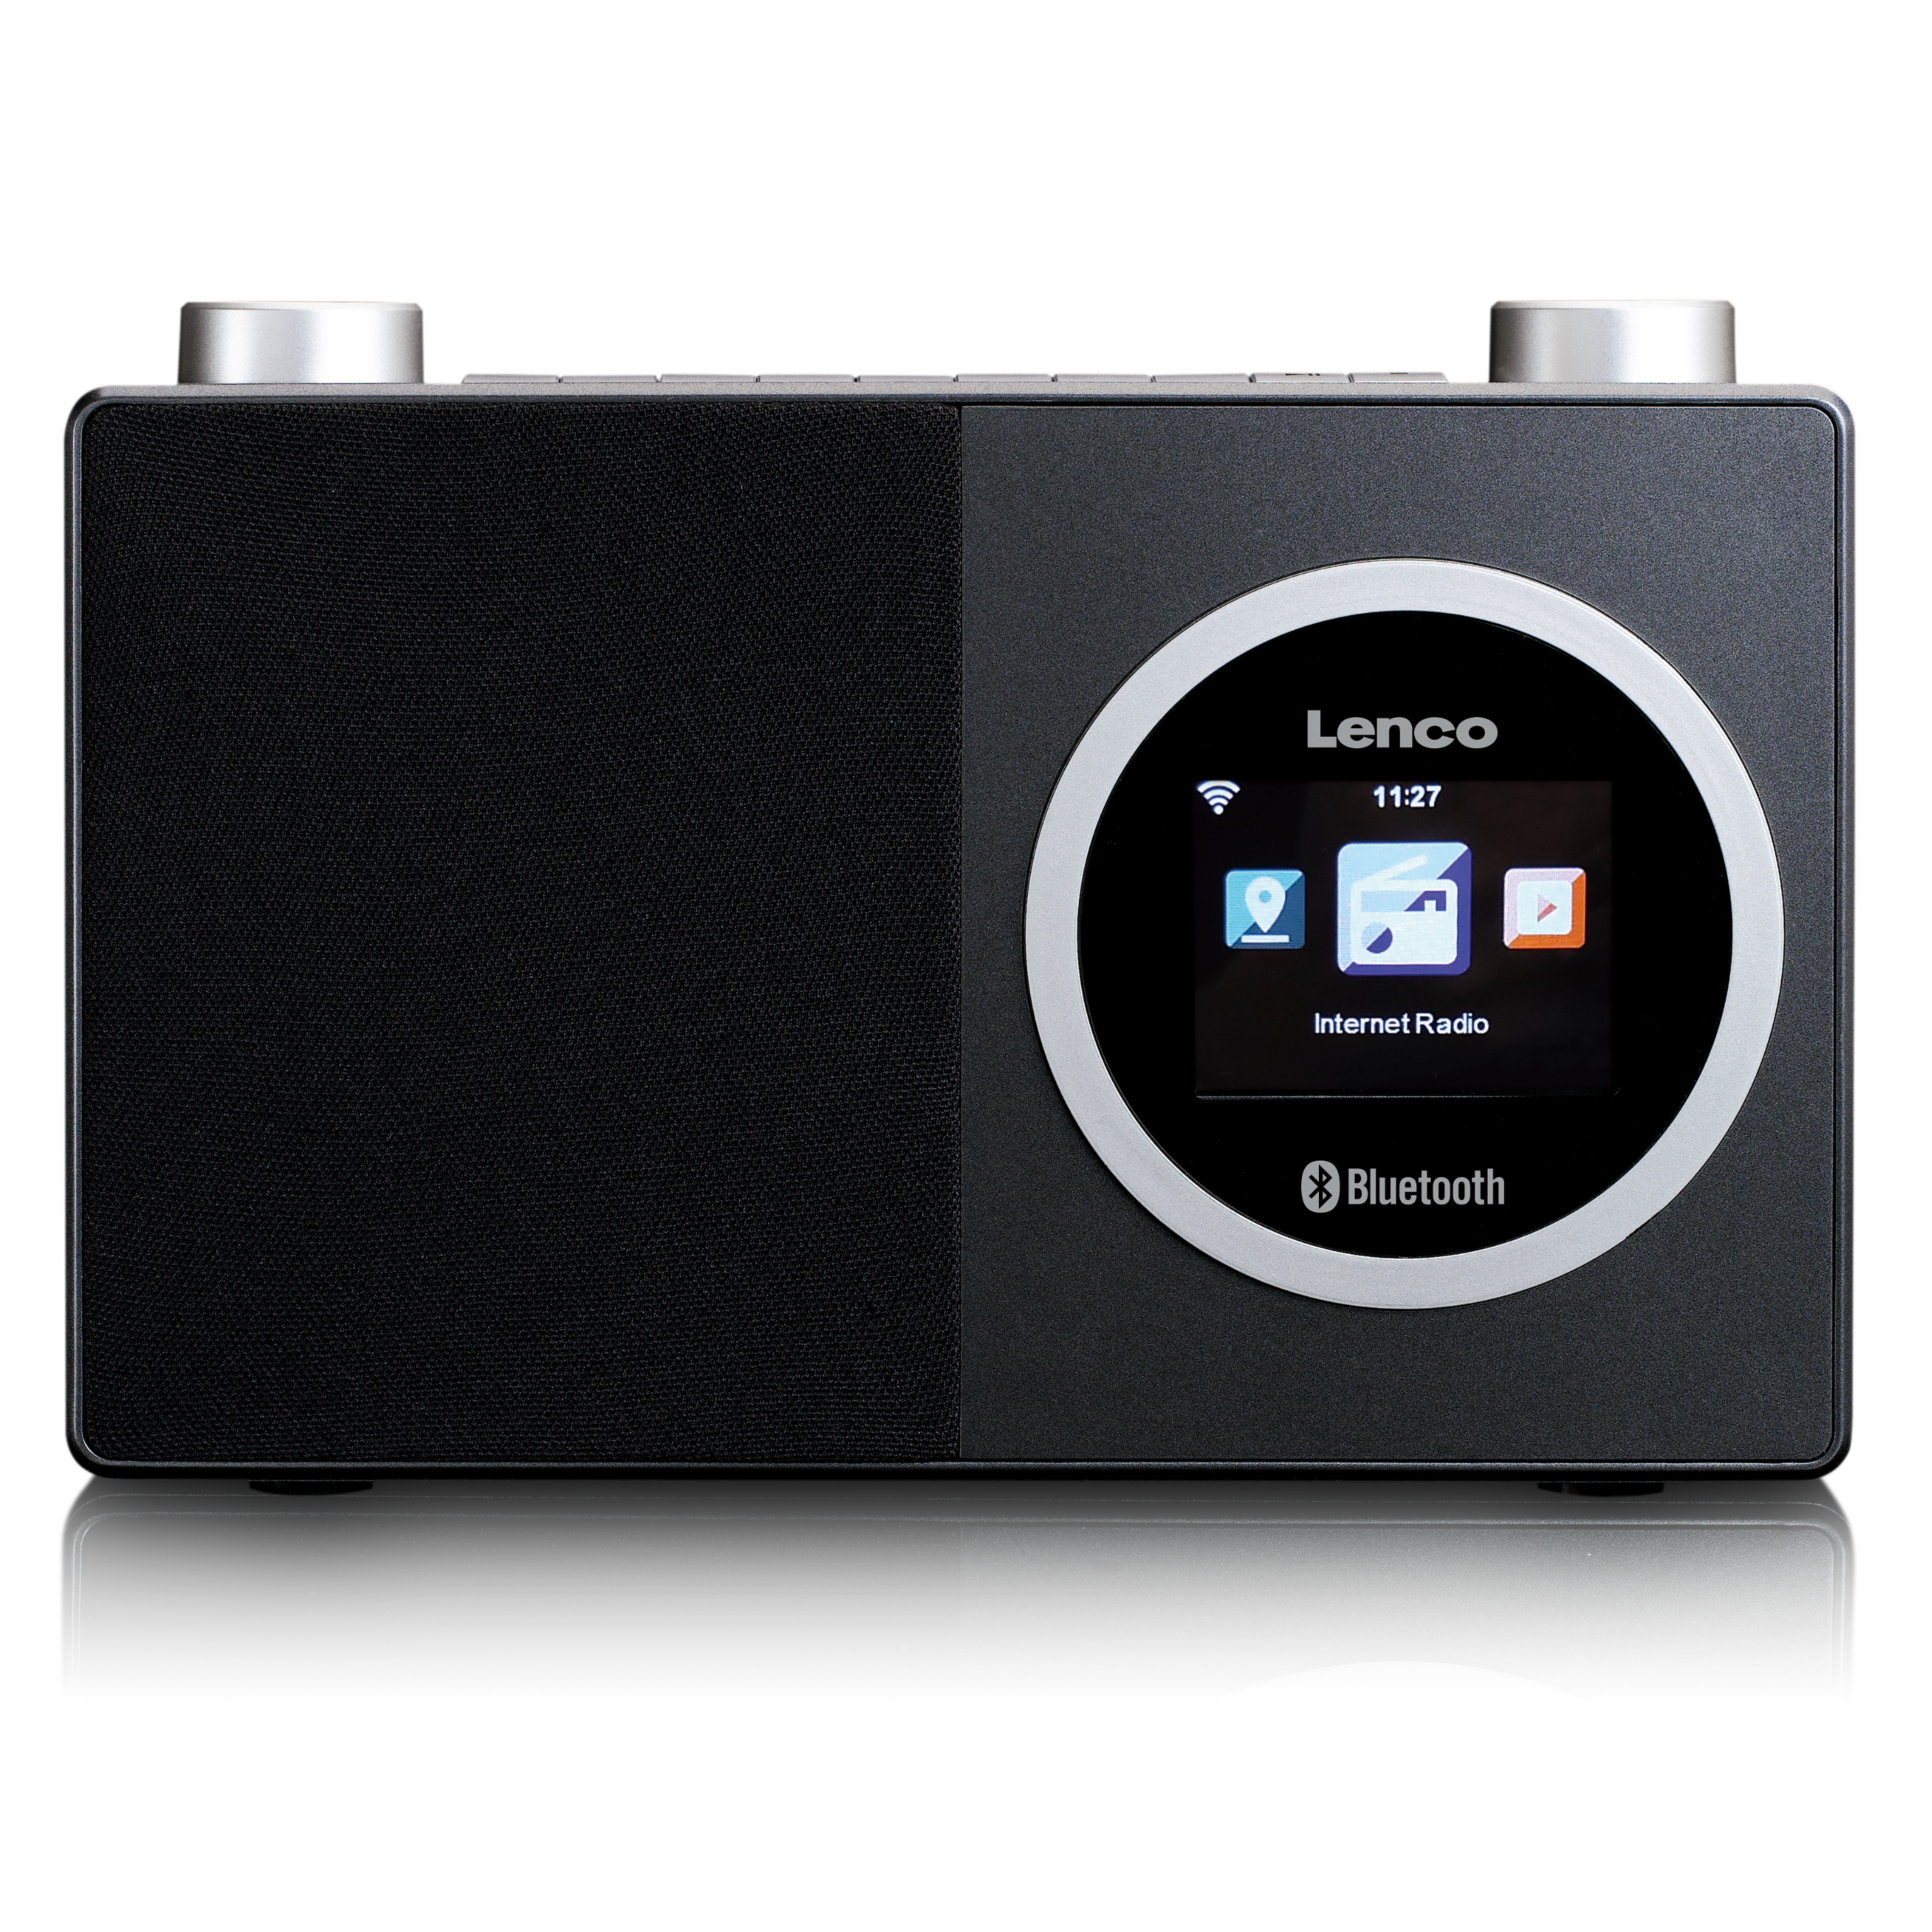 LENCO DIR-70BK - Internetradio mit Internet, Radio, Internet Kompaktes Bluetooth®, Schwarz-Silber und Bluetooth, Farbdisplay Radio